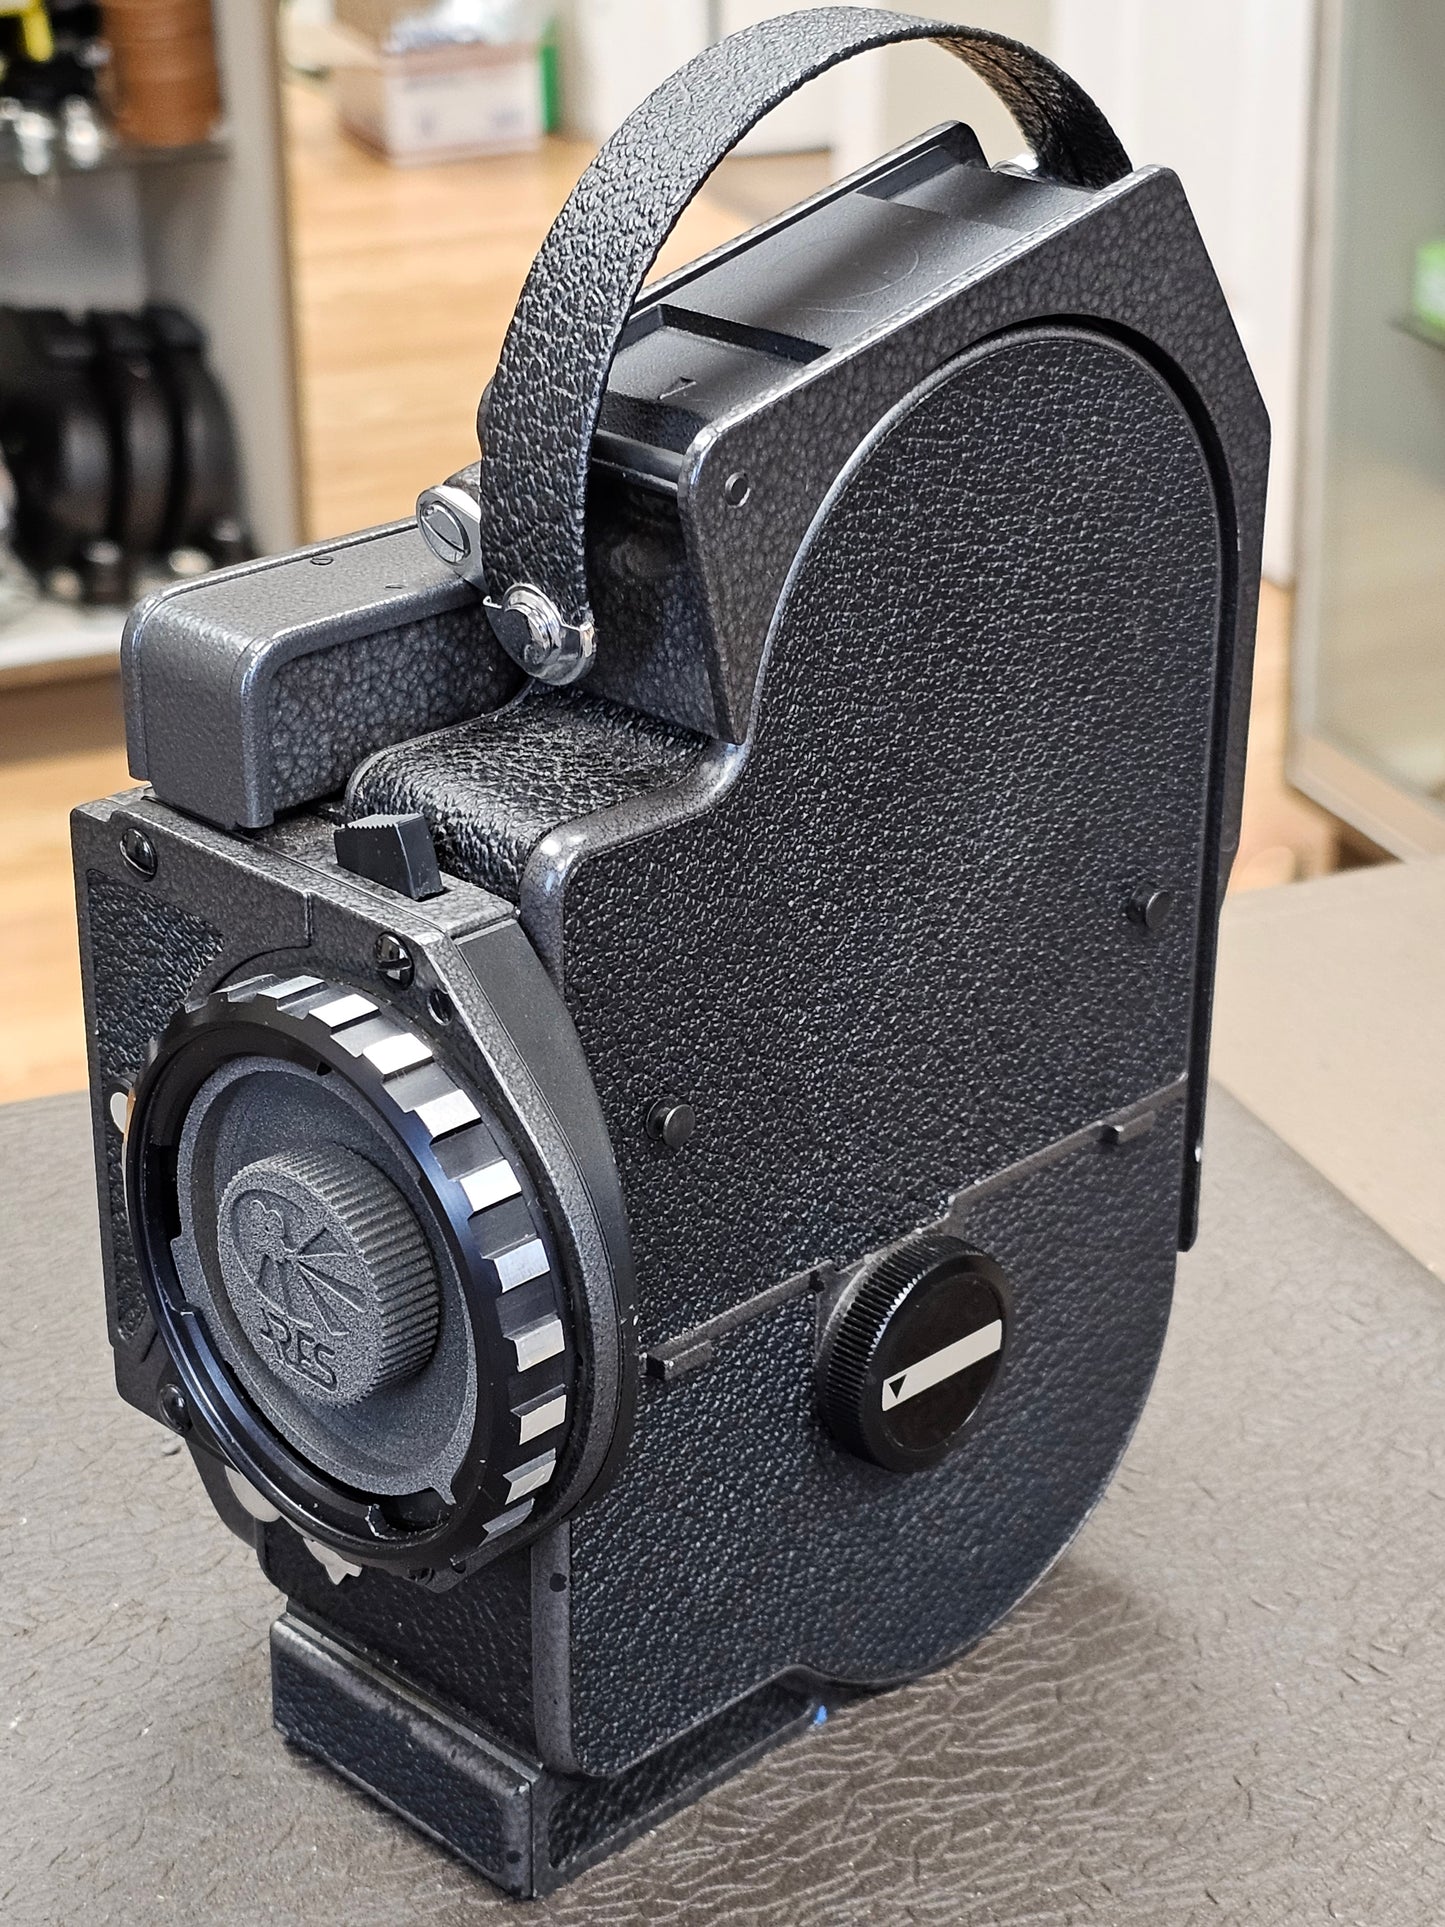 Bolex H16 EL III Camera with 13x Viewfinder S# 313127